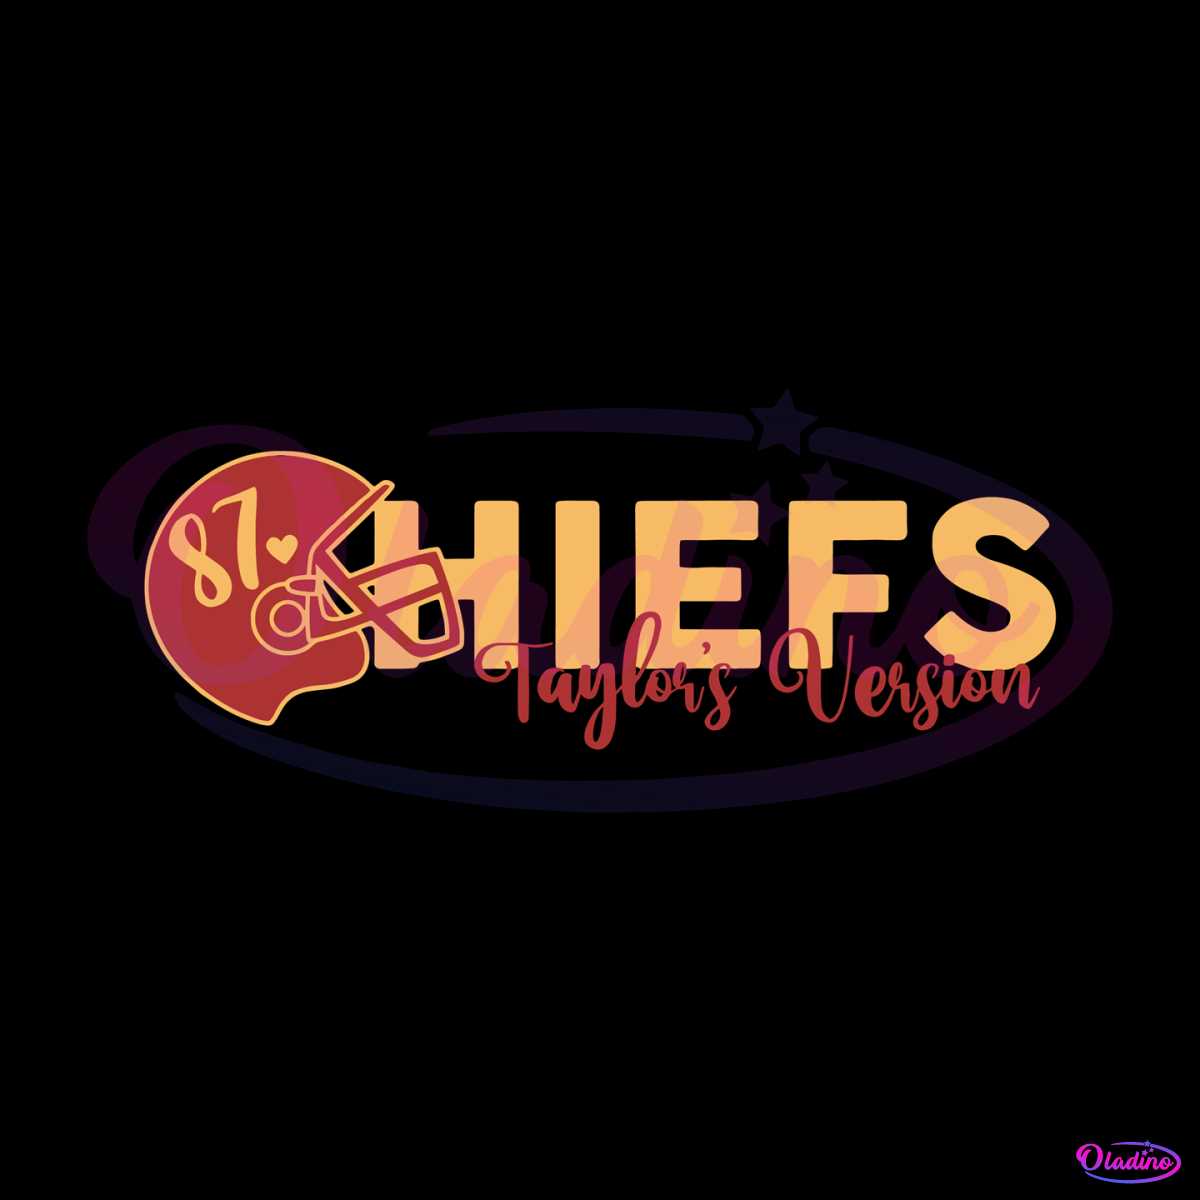 chiefs-taylors-version-the-damn-season-svg-download